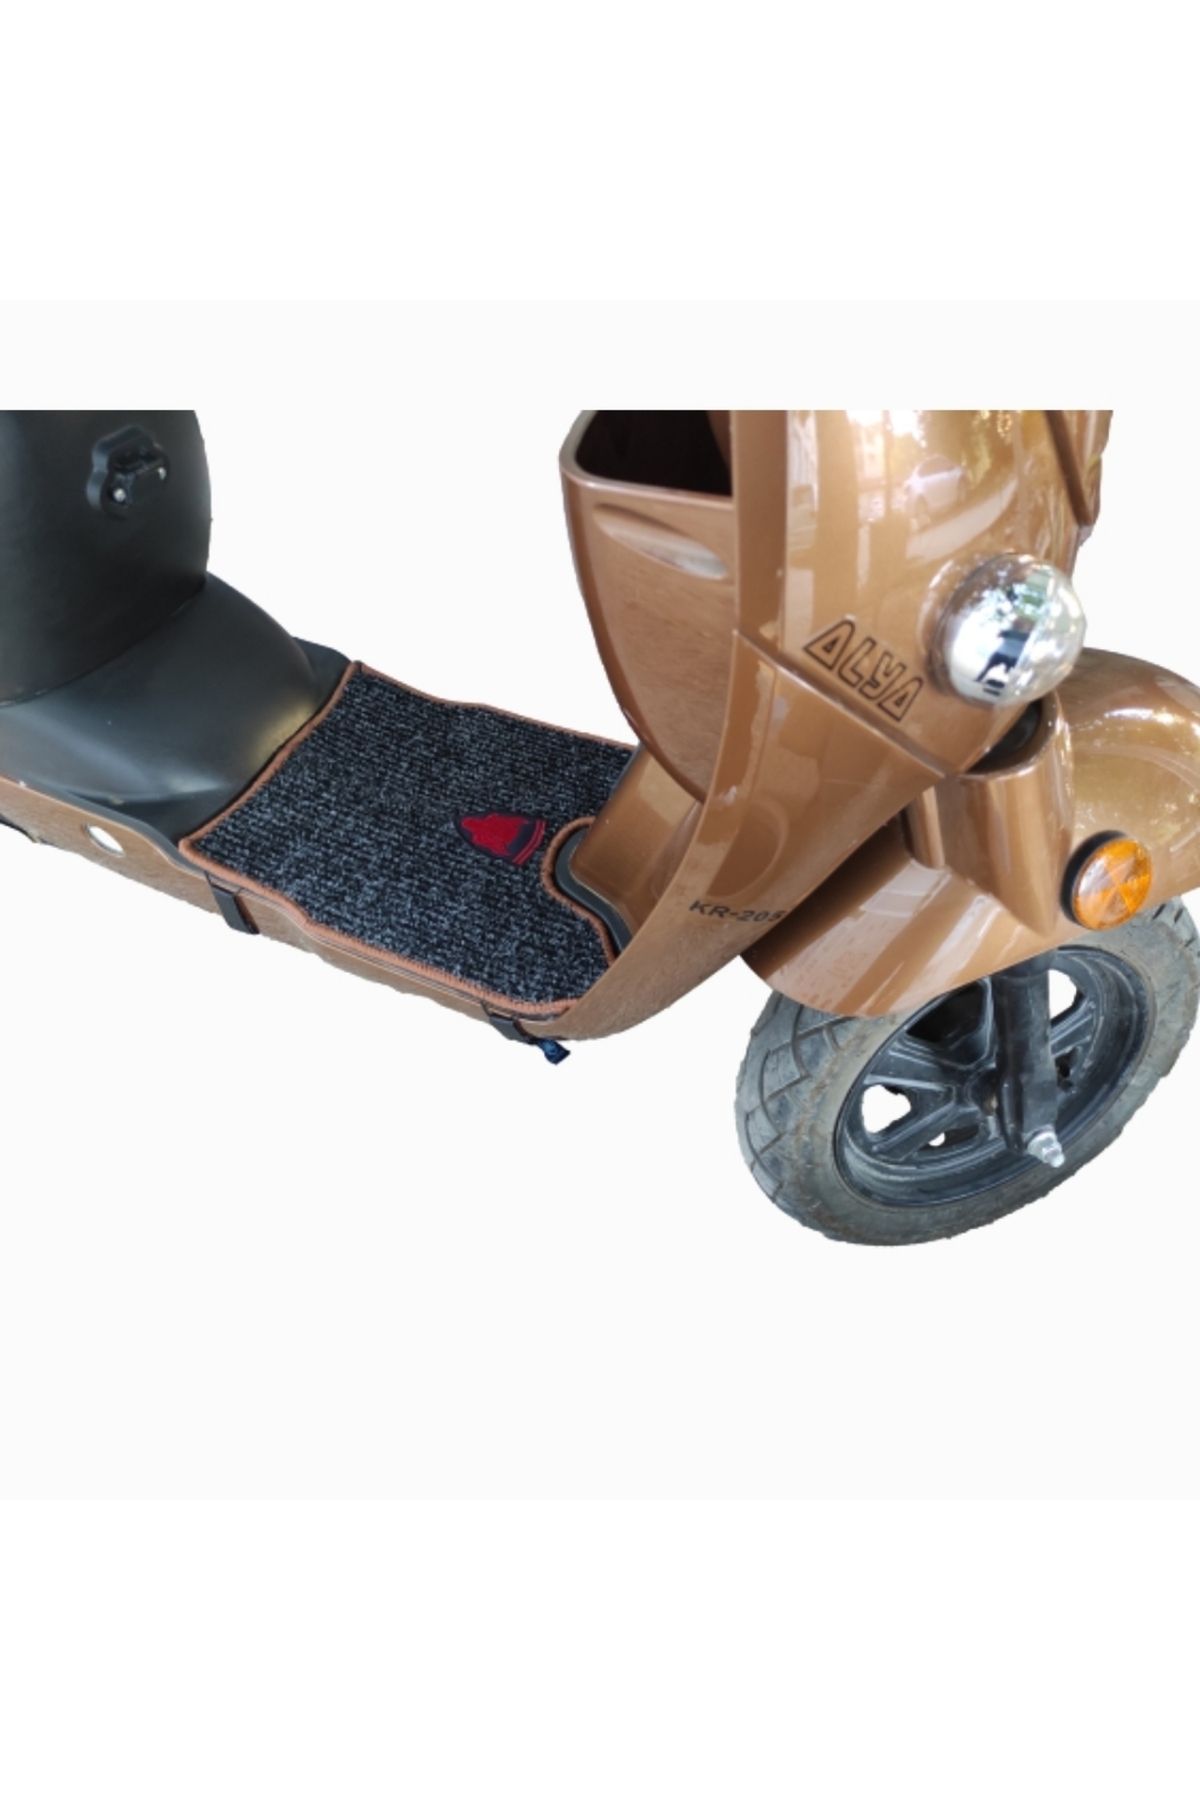 MEDITERIAN Kahverengi Alya Kr-205 Elektrikli Motosiklet Koruyucu Paspas Kurt Nakış Armalı Kahverengi Kenar Ove